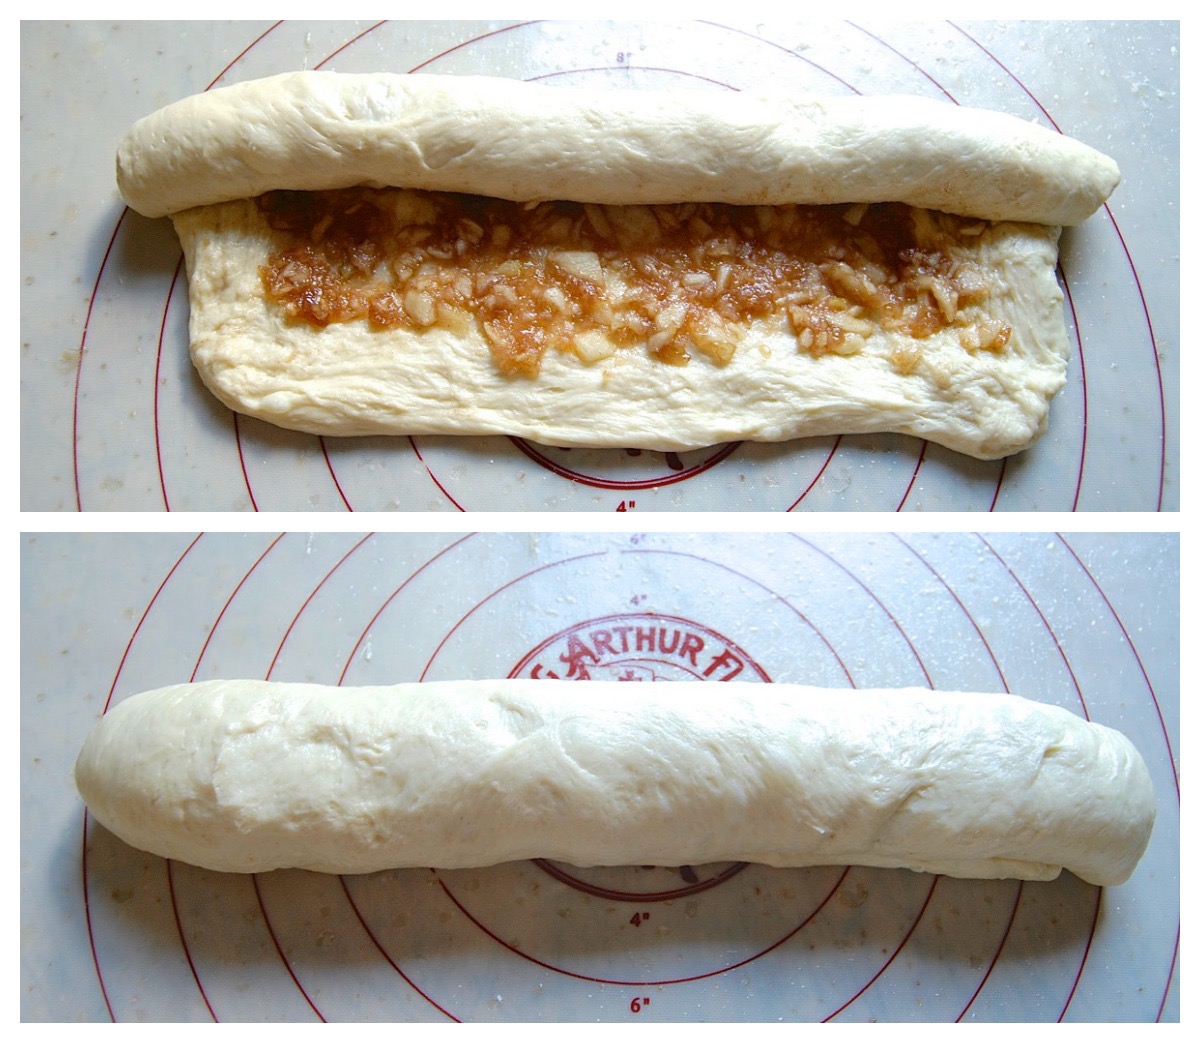 Cinnamon-Apple Twist Bread Bakealong via @kingarthurflour